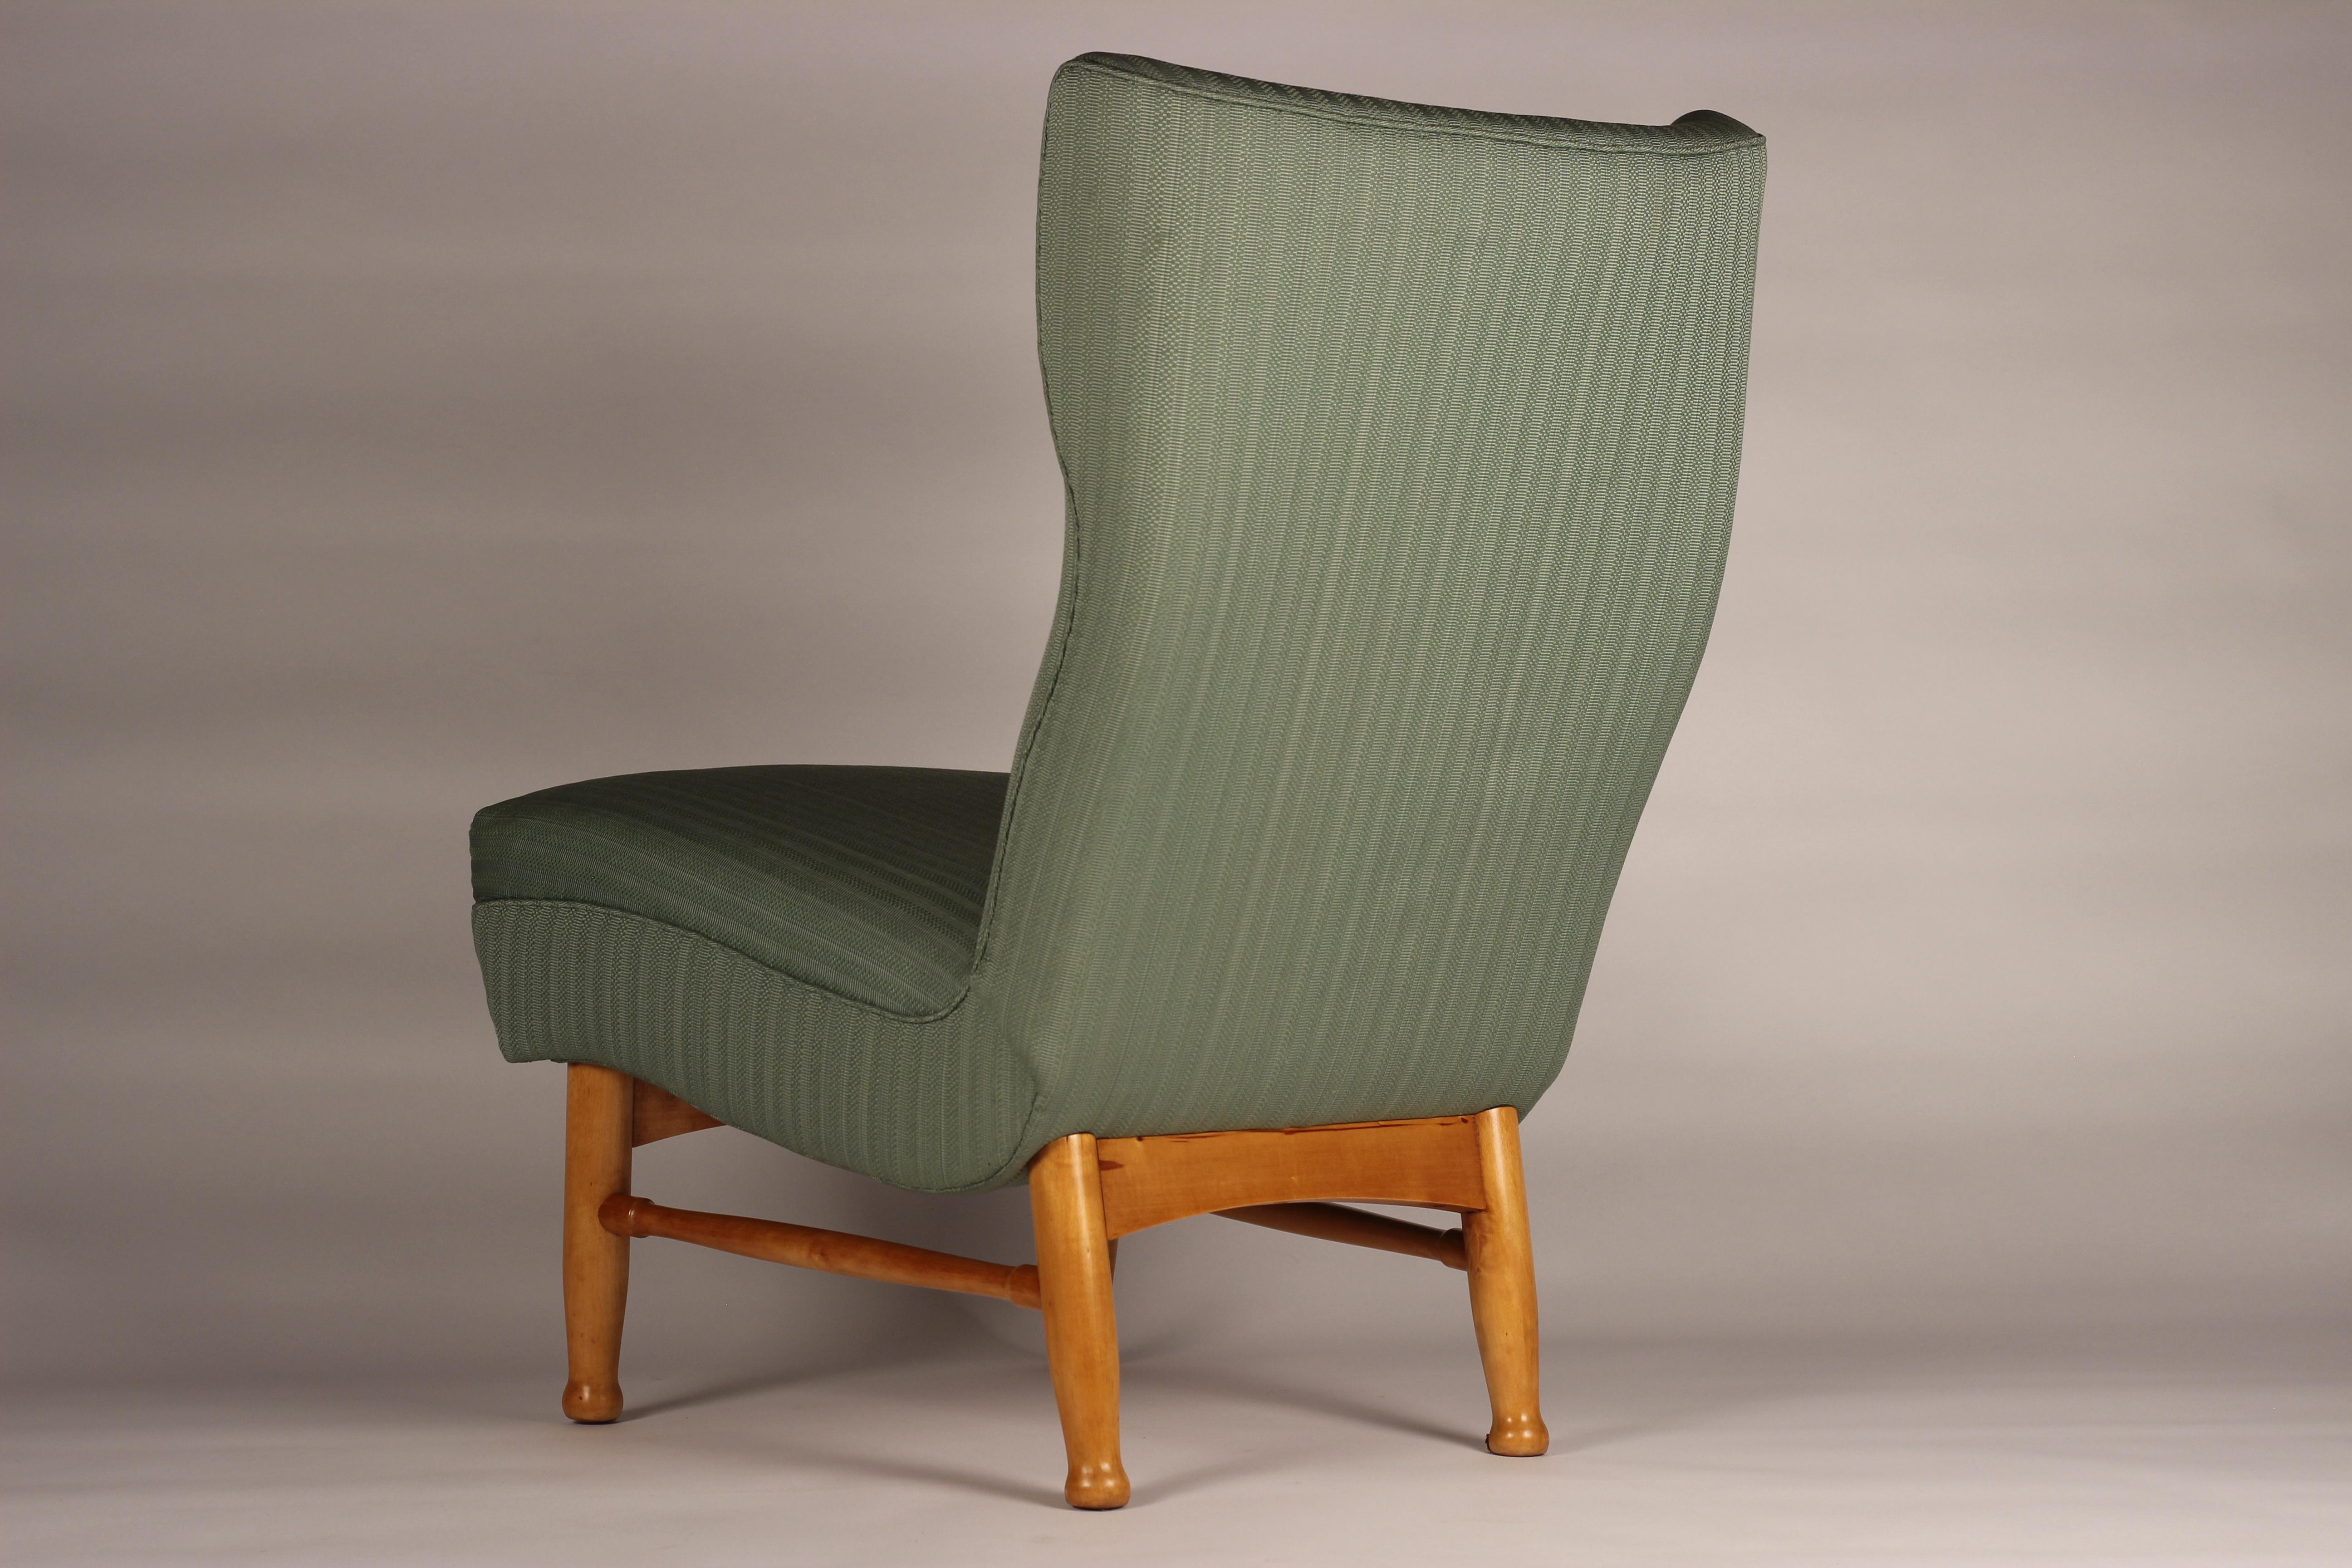 Swedish Scandinavian Modern Chair by Elias Svedberg for Nordiska Kompaniet Sweden 1950’s For Sale